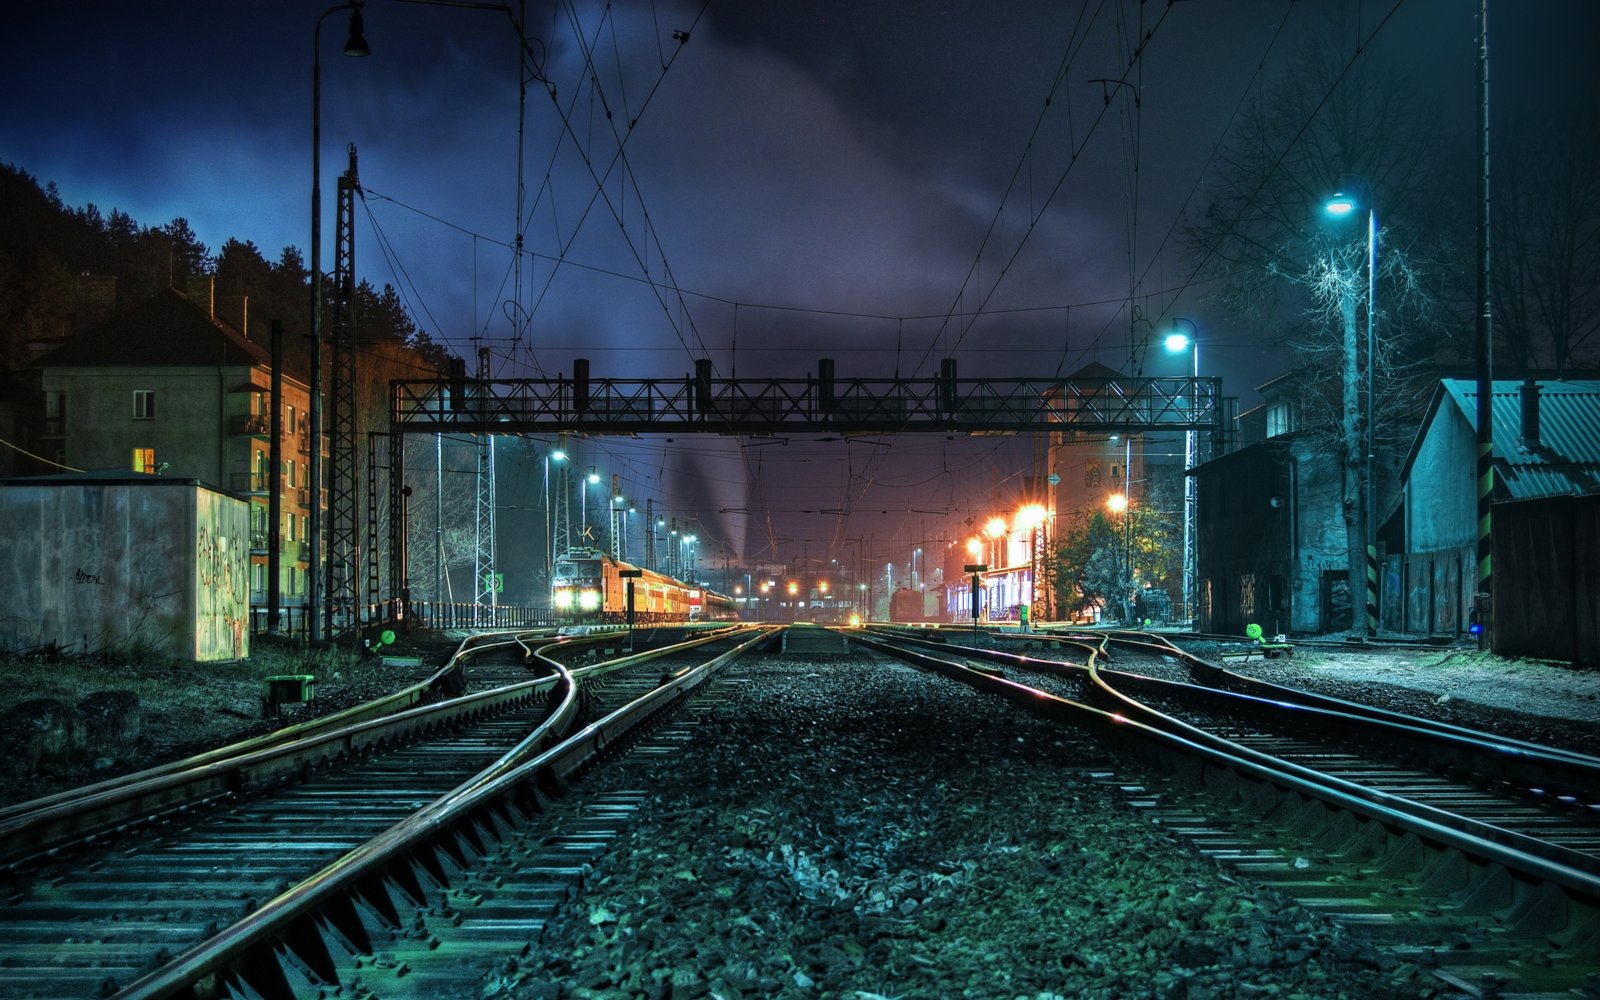 RElaxing-railroad-track-wallpapers-8.jpg